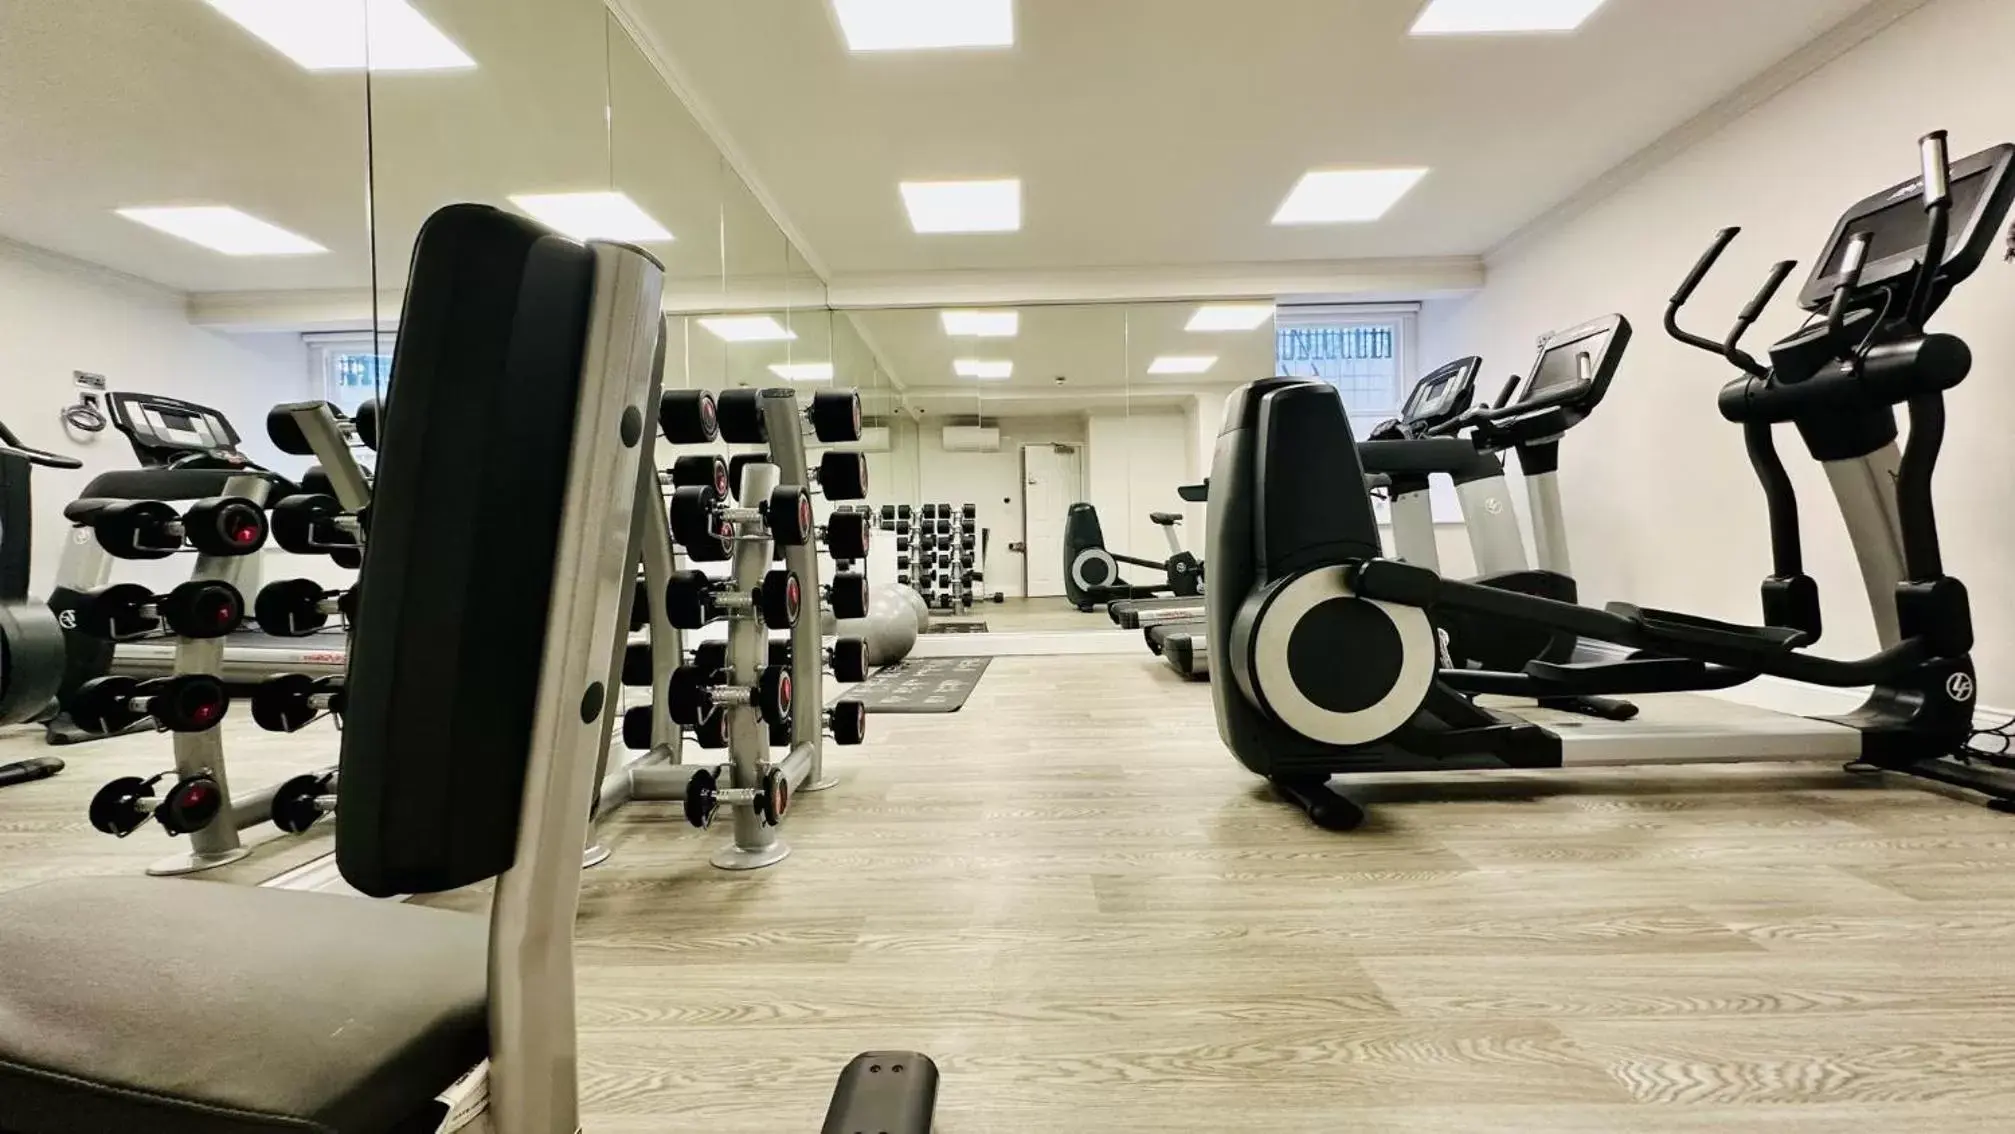 Fitness centre/facilities, Fitness Center/Facilities in Commodore Hotel